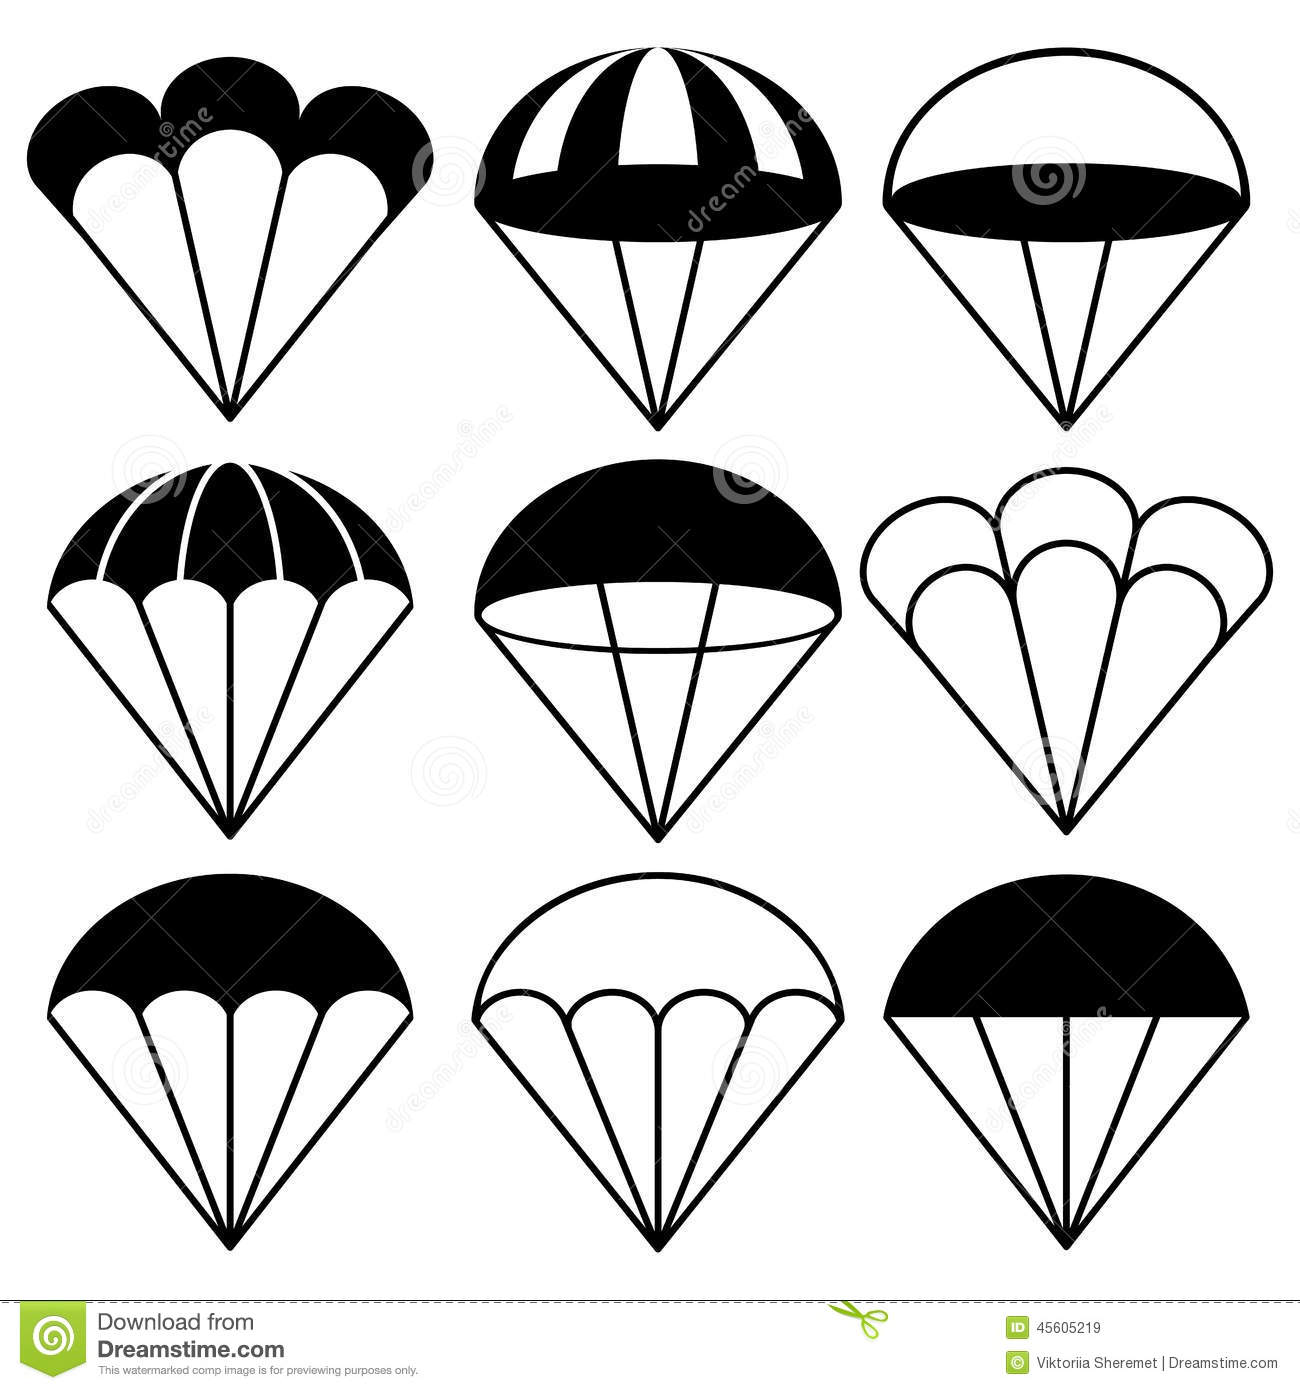 Parachute Icons Set Vector Illustration Black And White Version